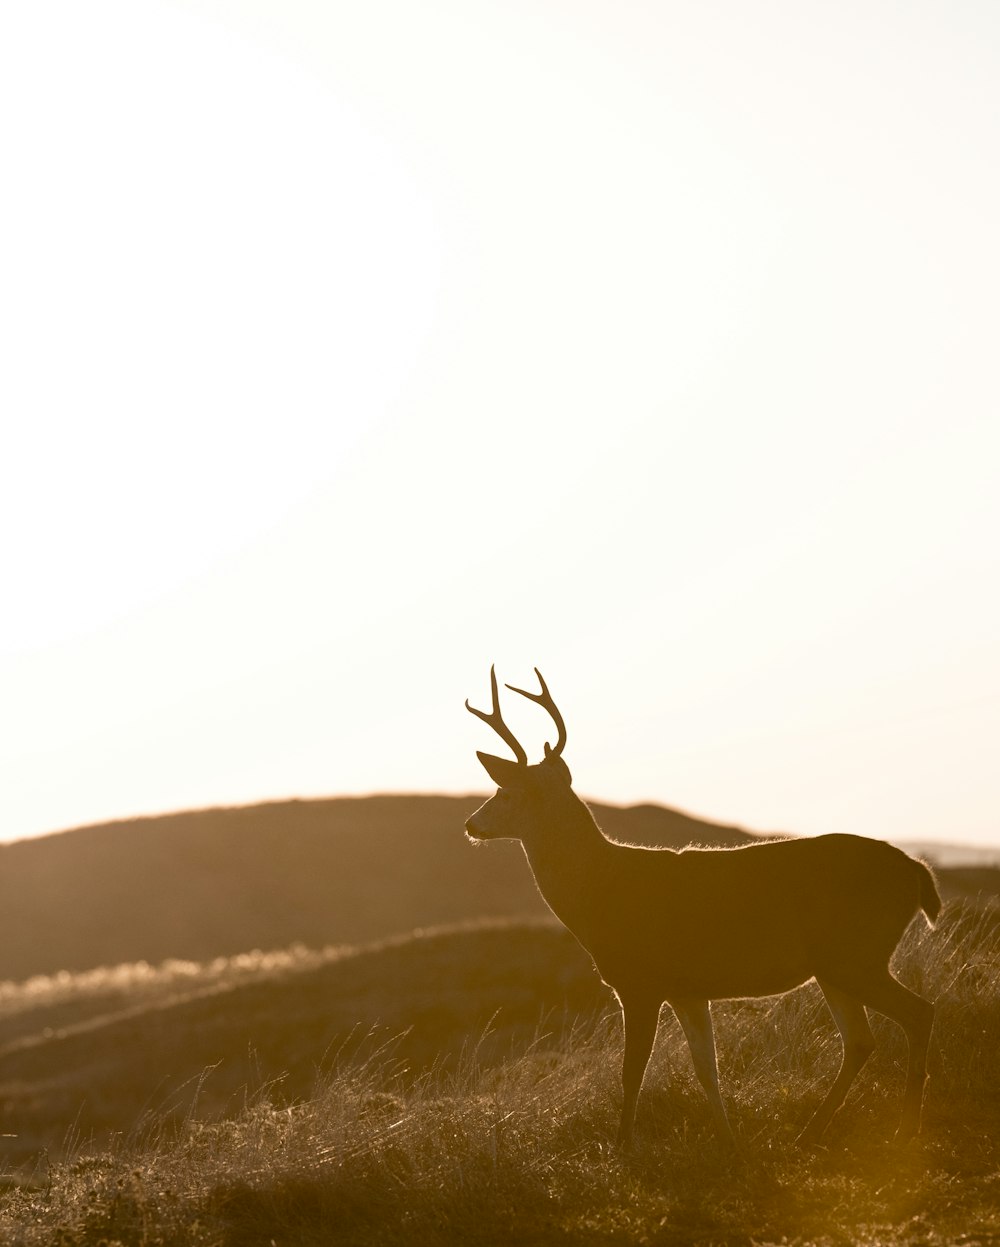 silhouette of deer standing on grass field